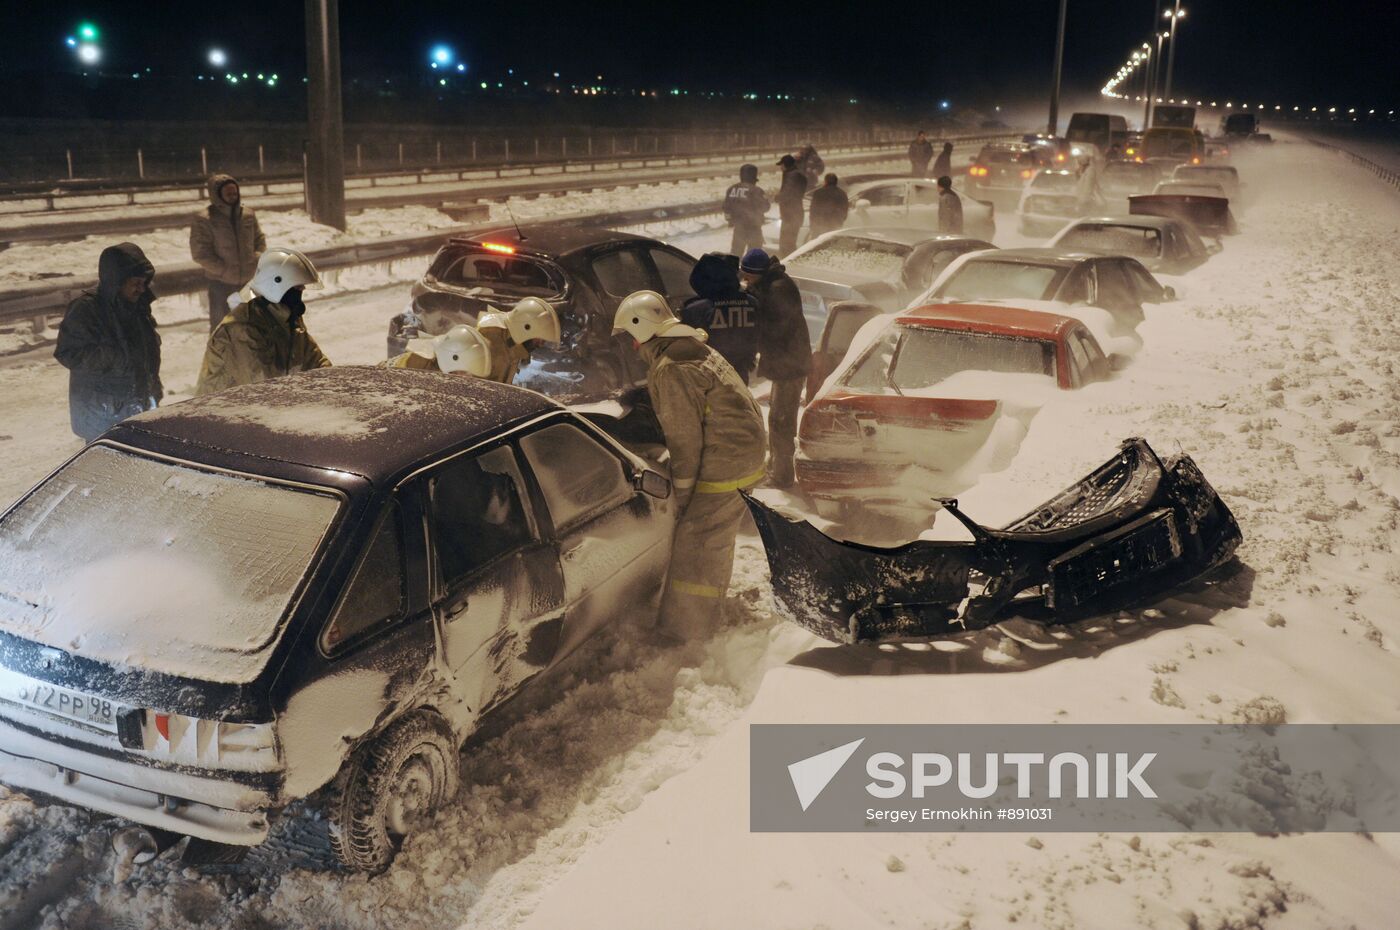 Major car accident near St. Petersburg